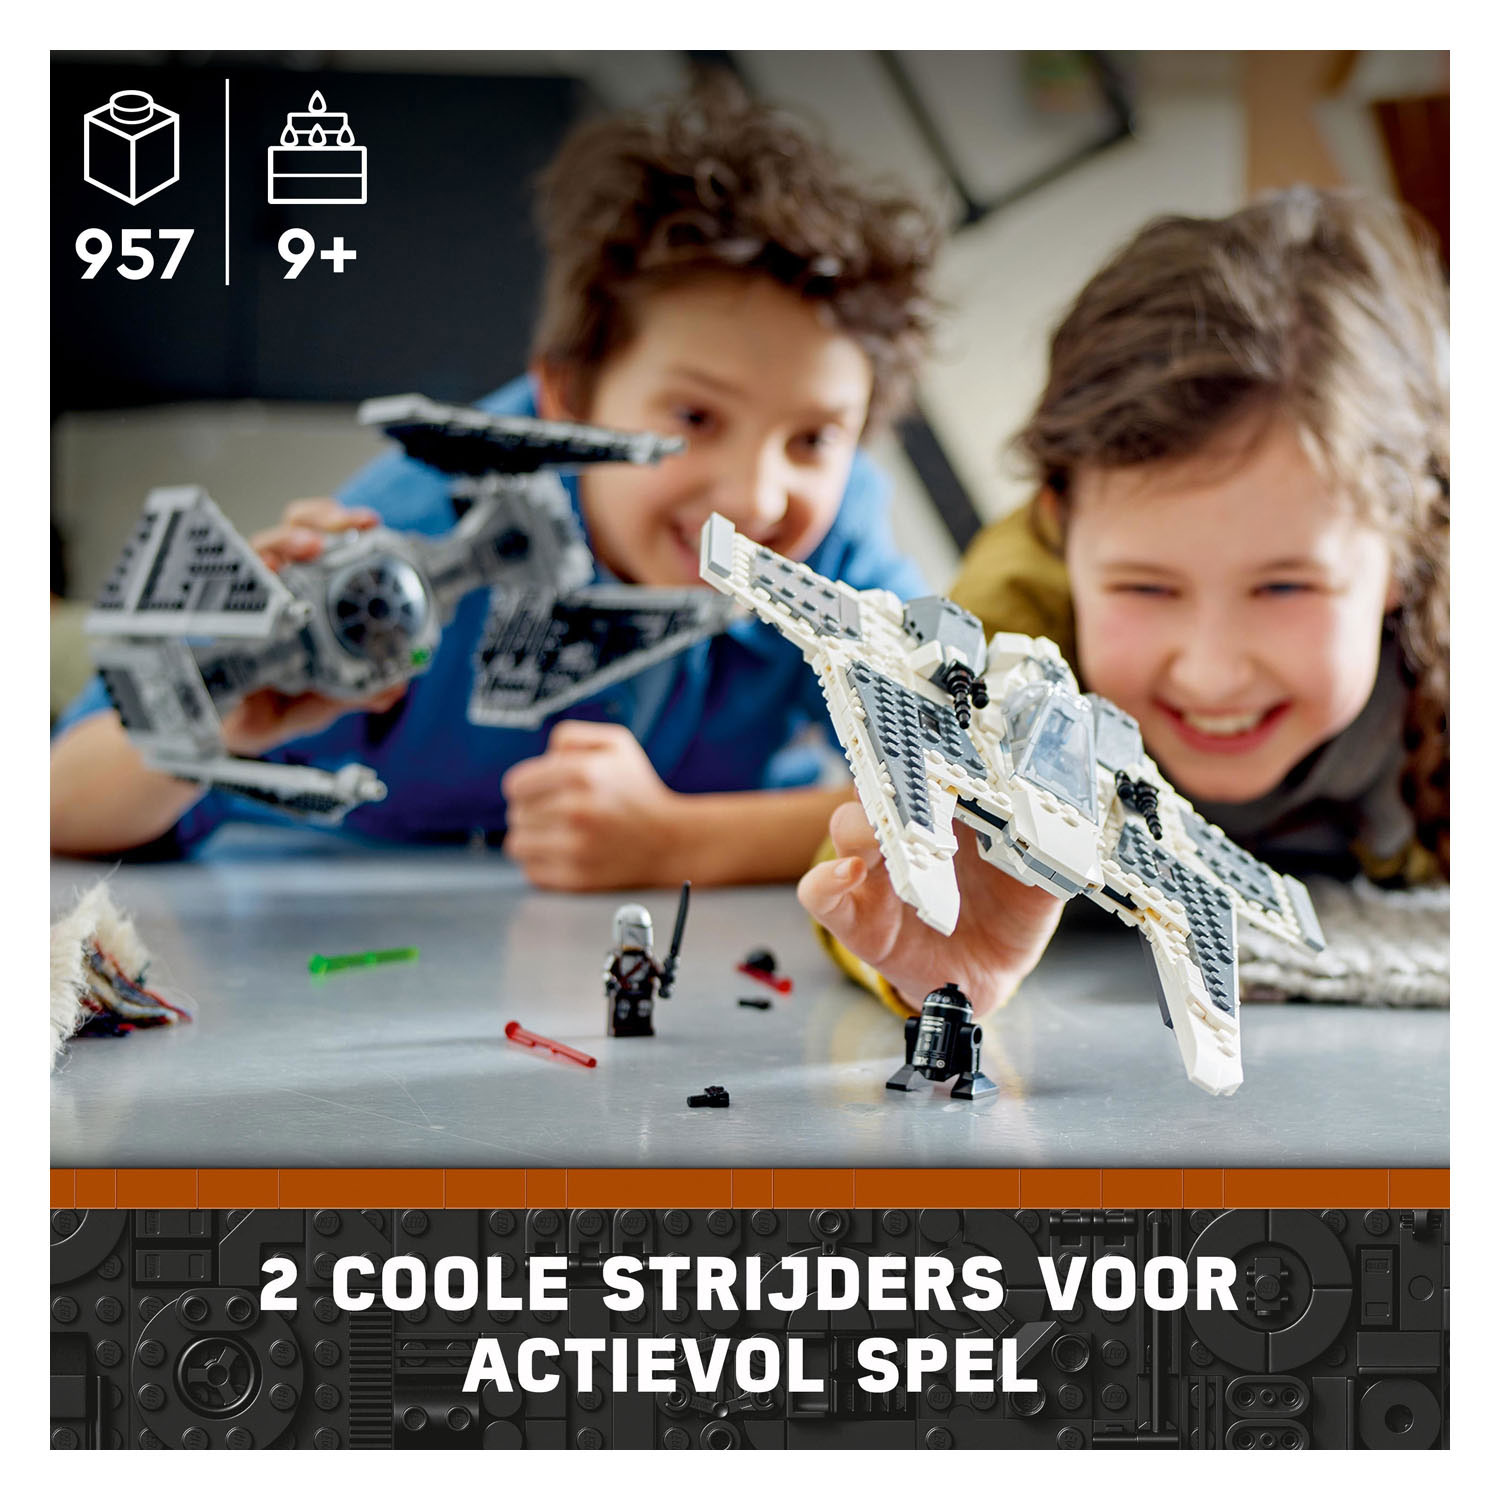 LEGO Star Wars 75348 Mandalorian Fang Fighter vs. TIE Interceptor Set